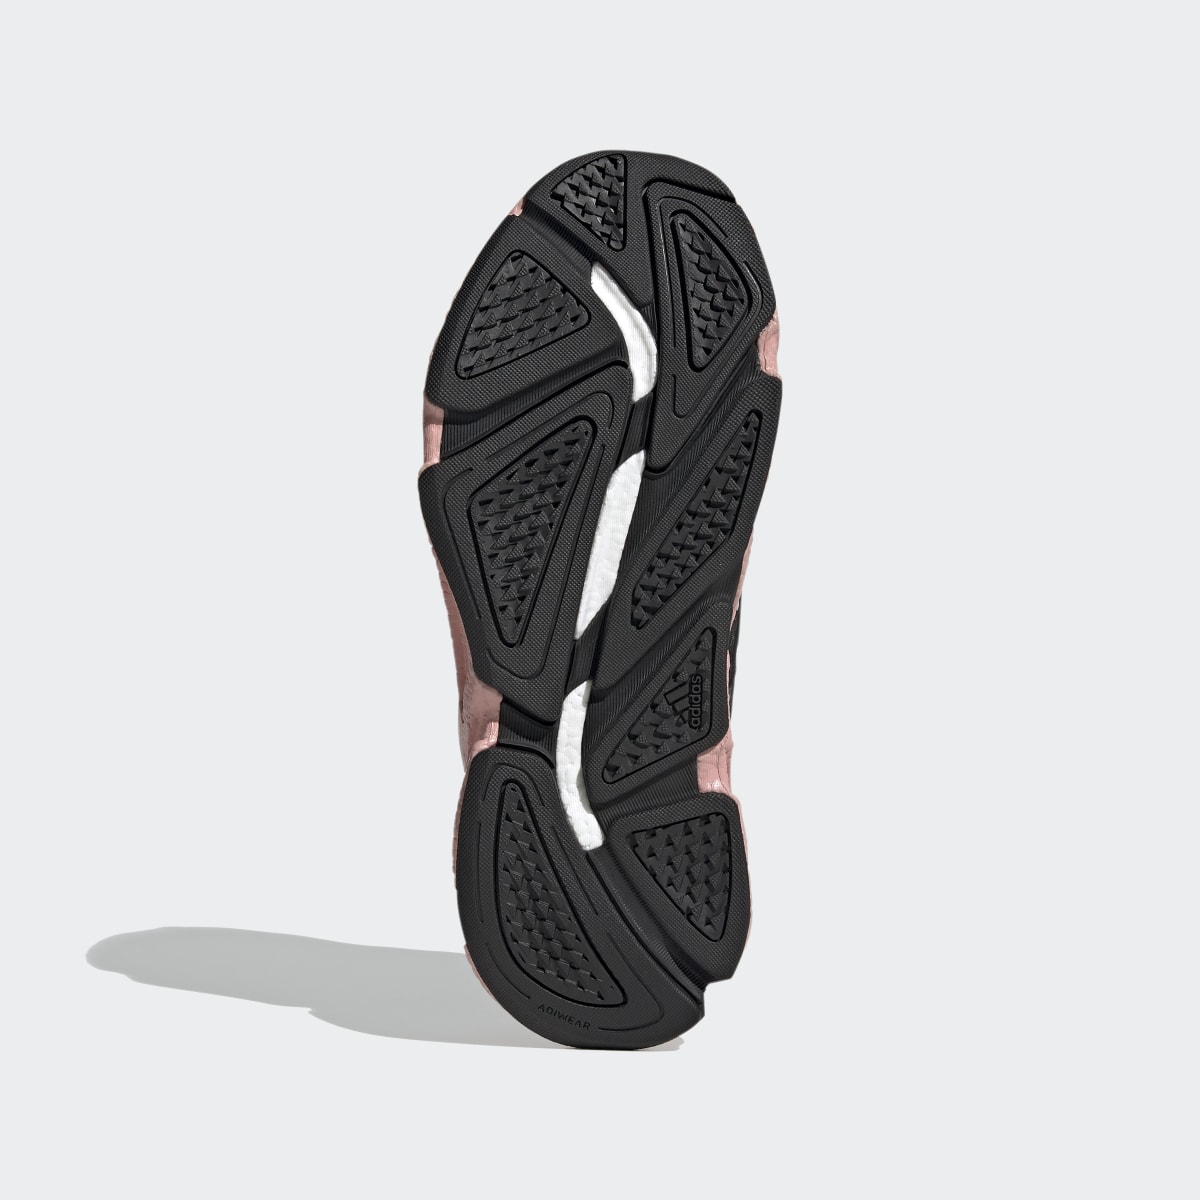 Adidas Scarpe Karlie Kloss X9000. 6